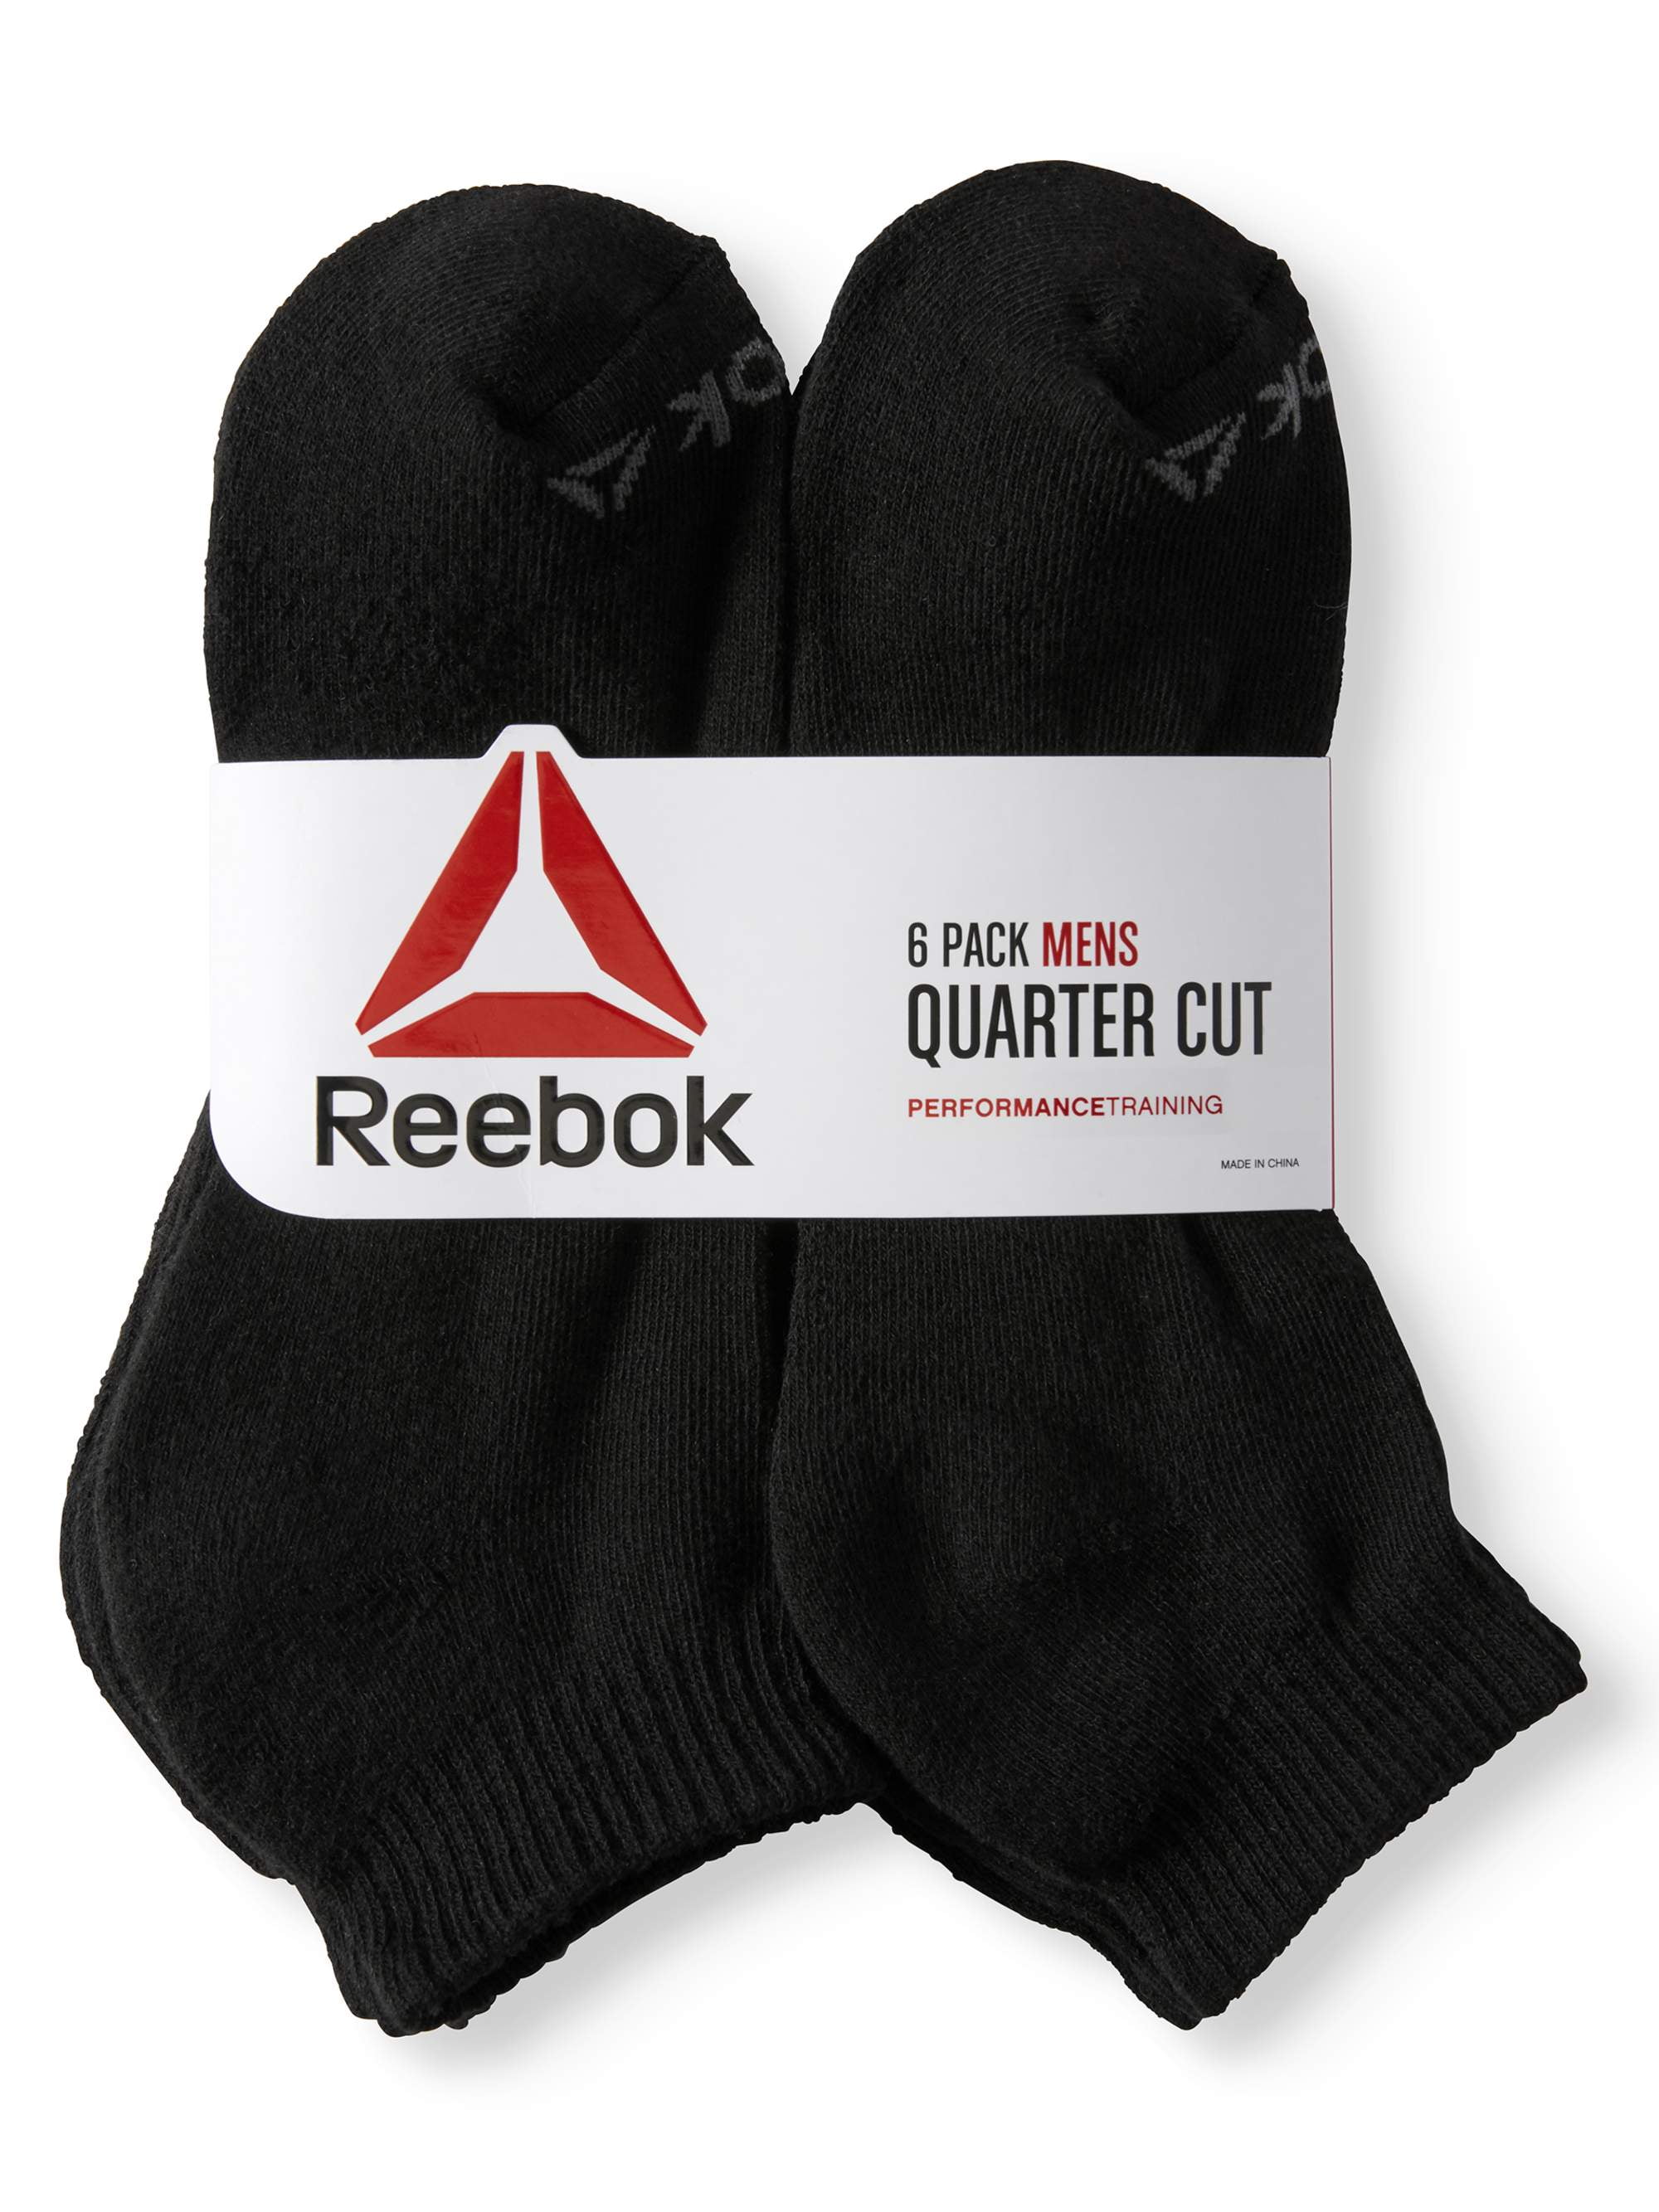 Reebok - Reebok Men's Quarter Socks, 6 